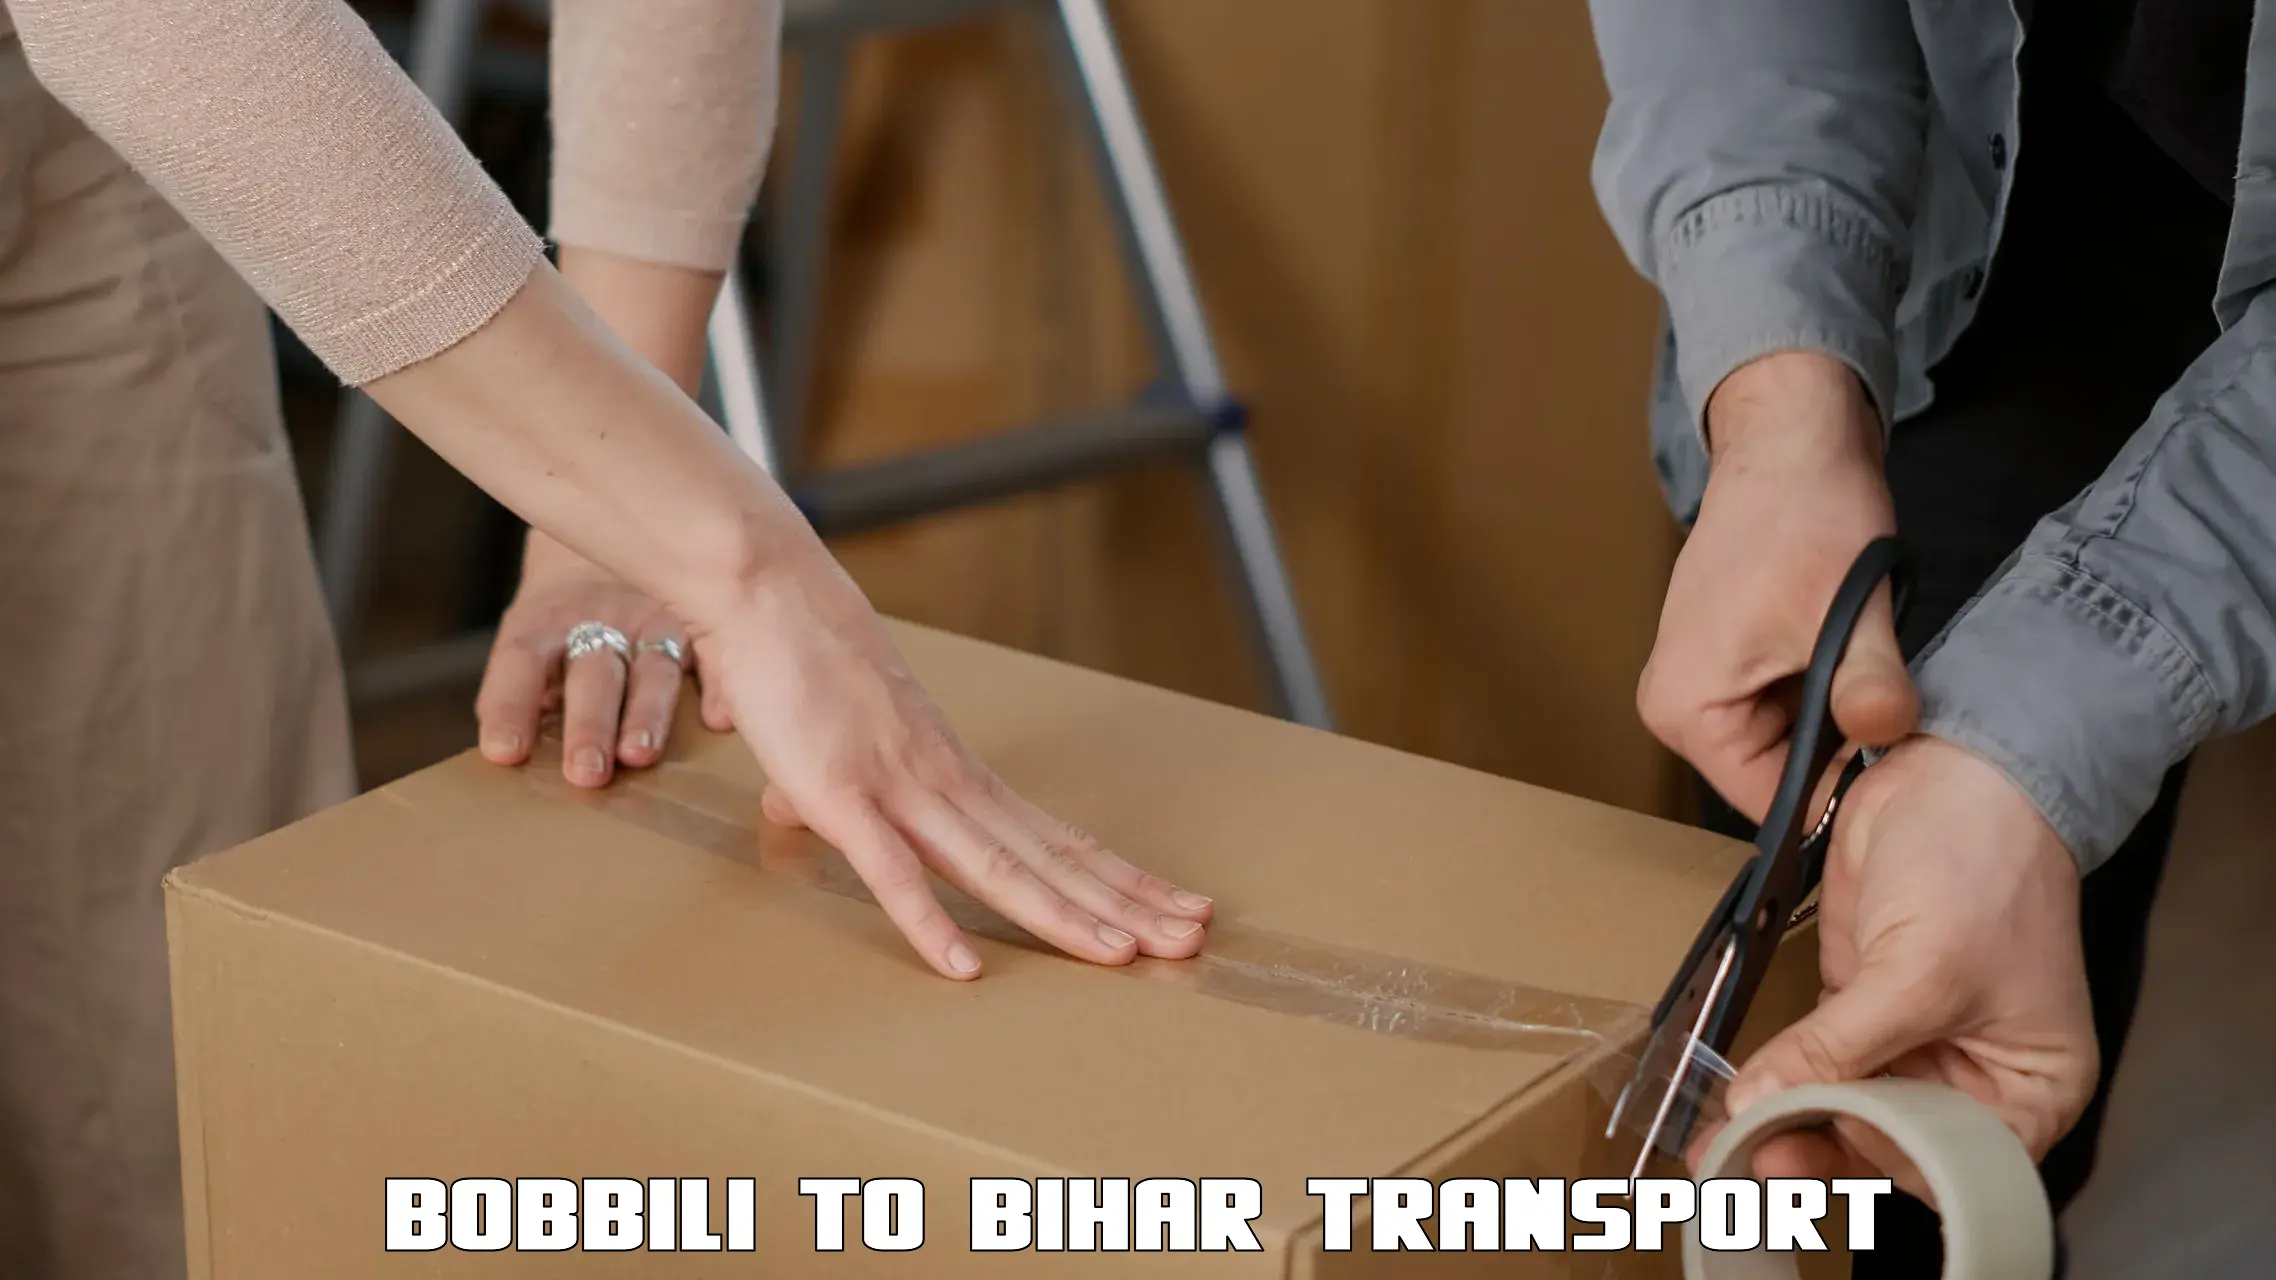 Container transport service Bobbili to Dhaka